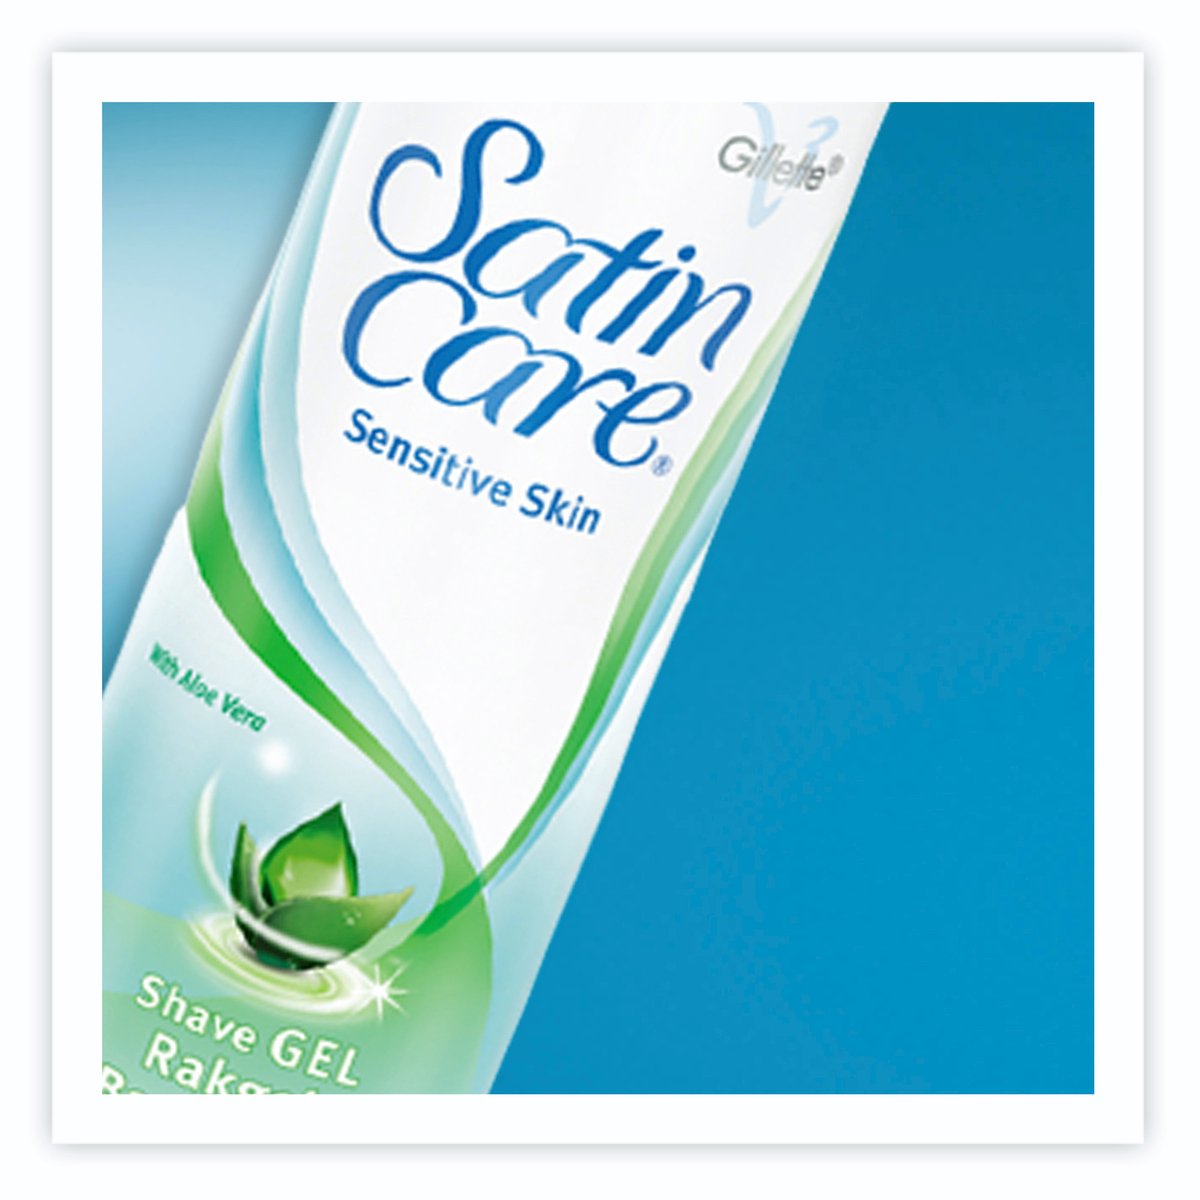 Gillette Satin Care Sensitive Shaving Gel 200 ml